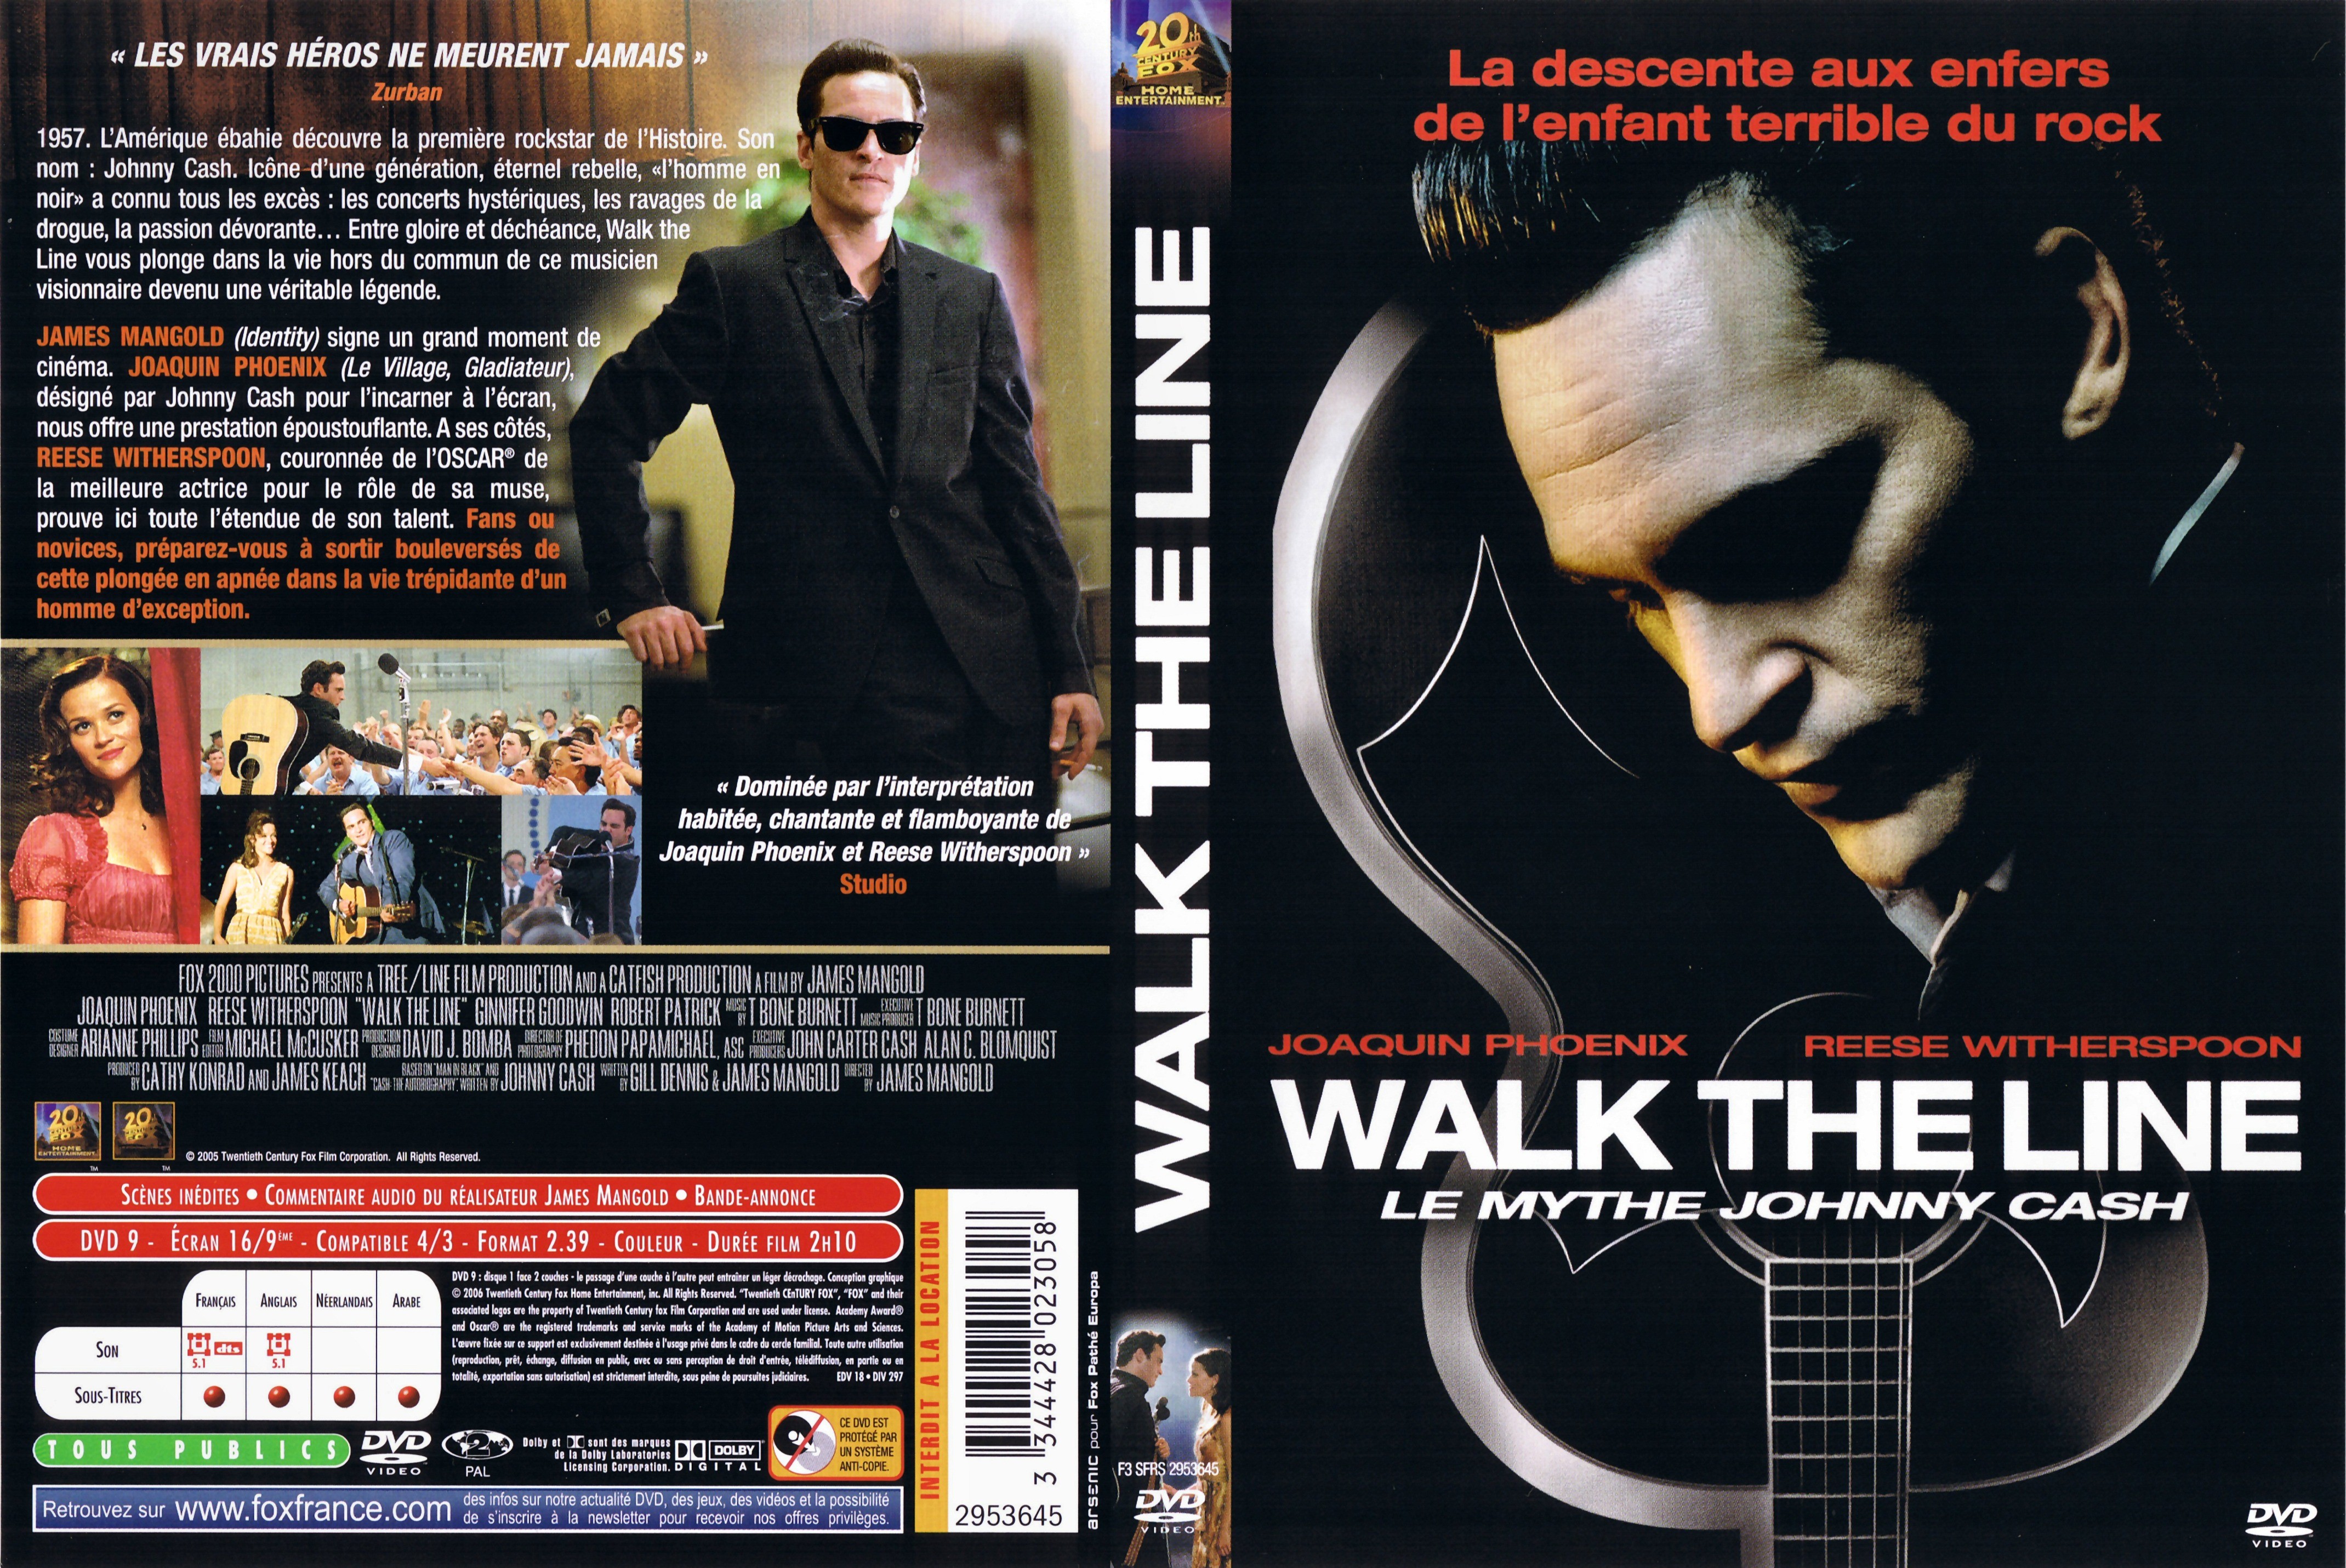 Jaquette DVD Walk the line